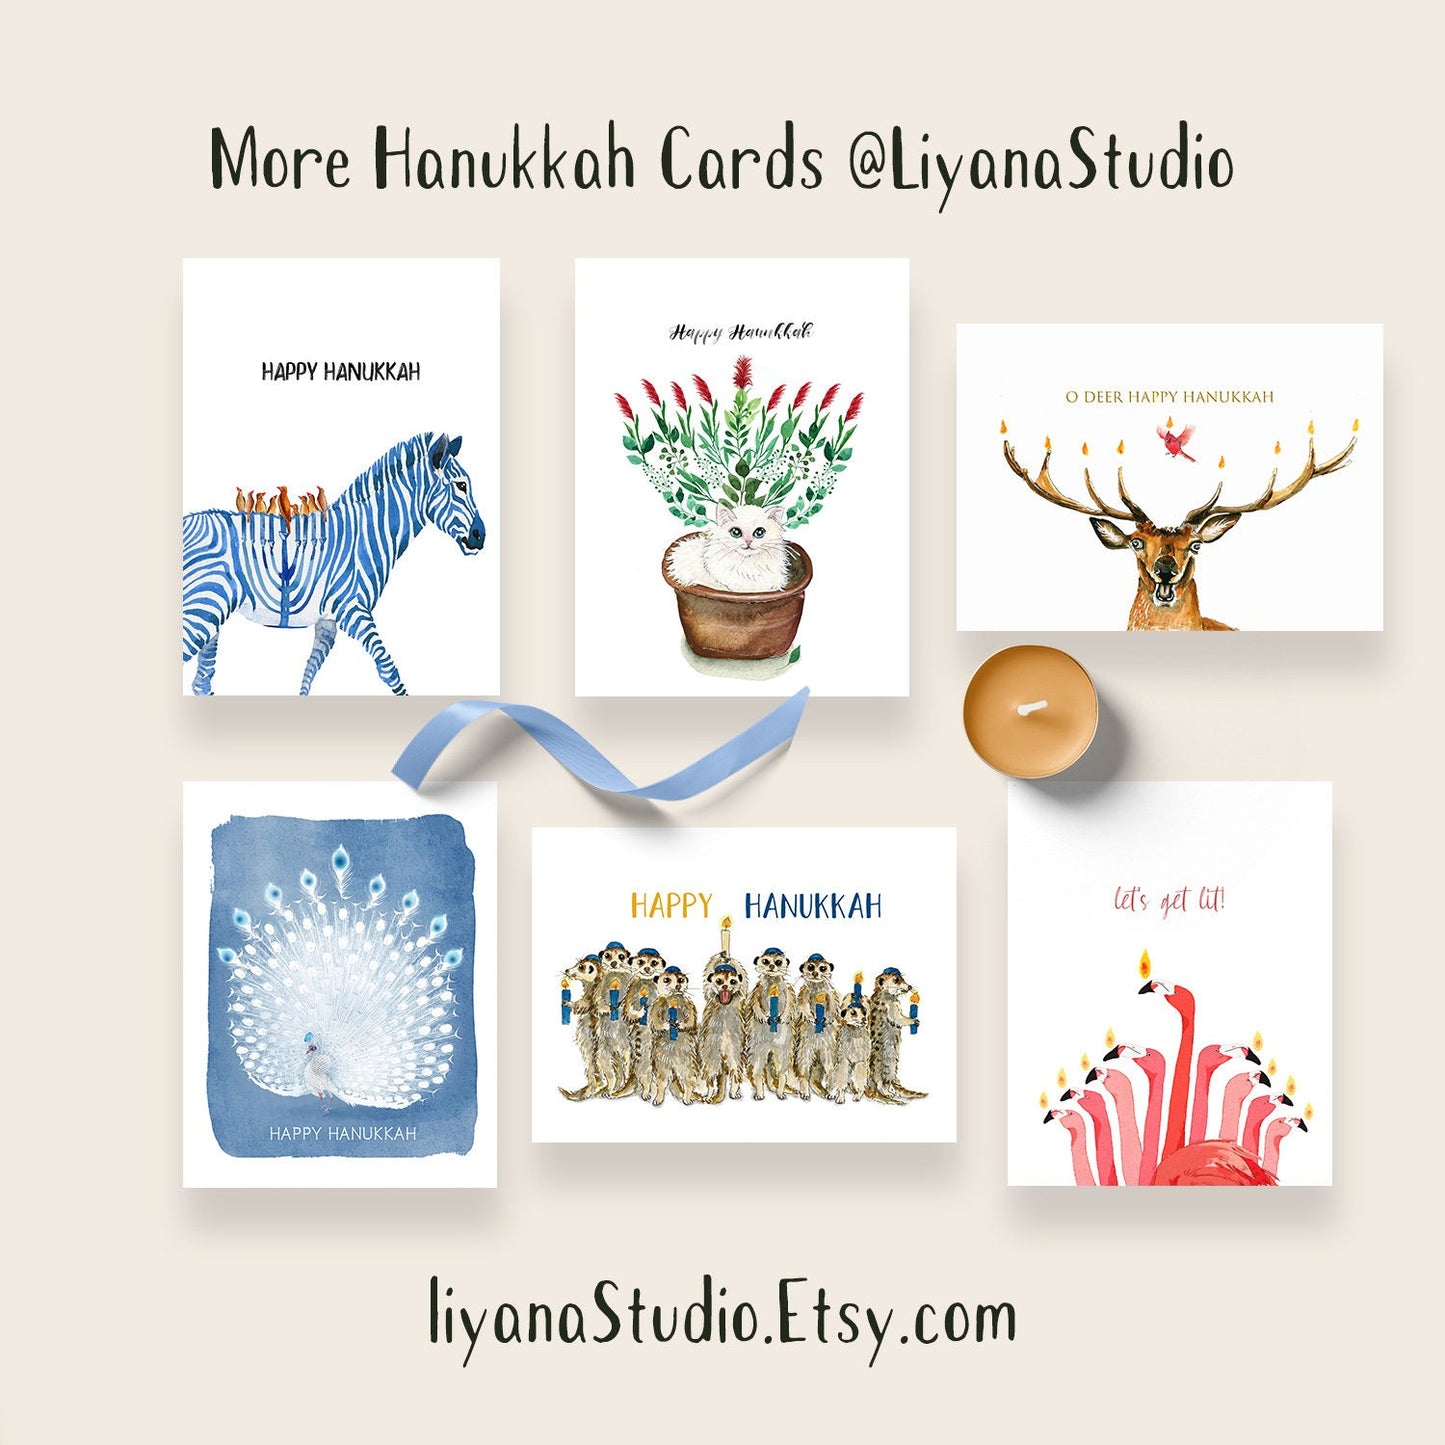 Peacock Happy Hanukkah Cards - Jewish Holiday Watercolor Greeting Card Handmade